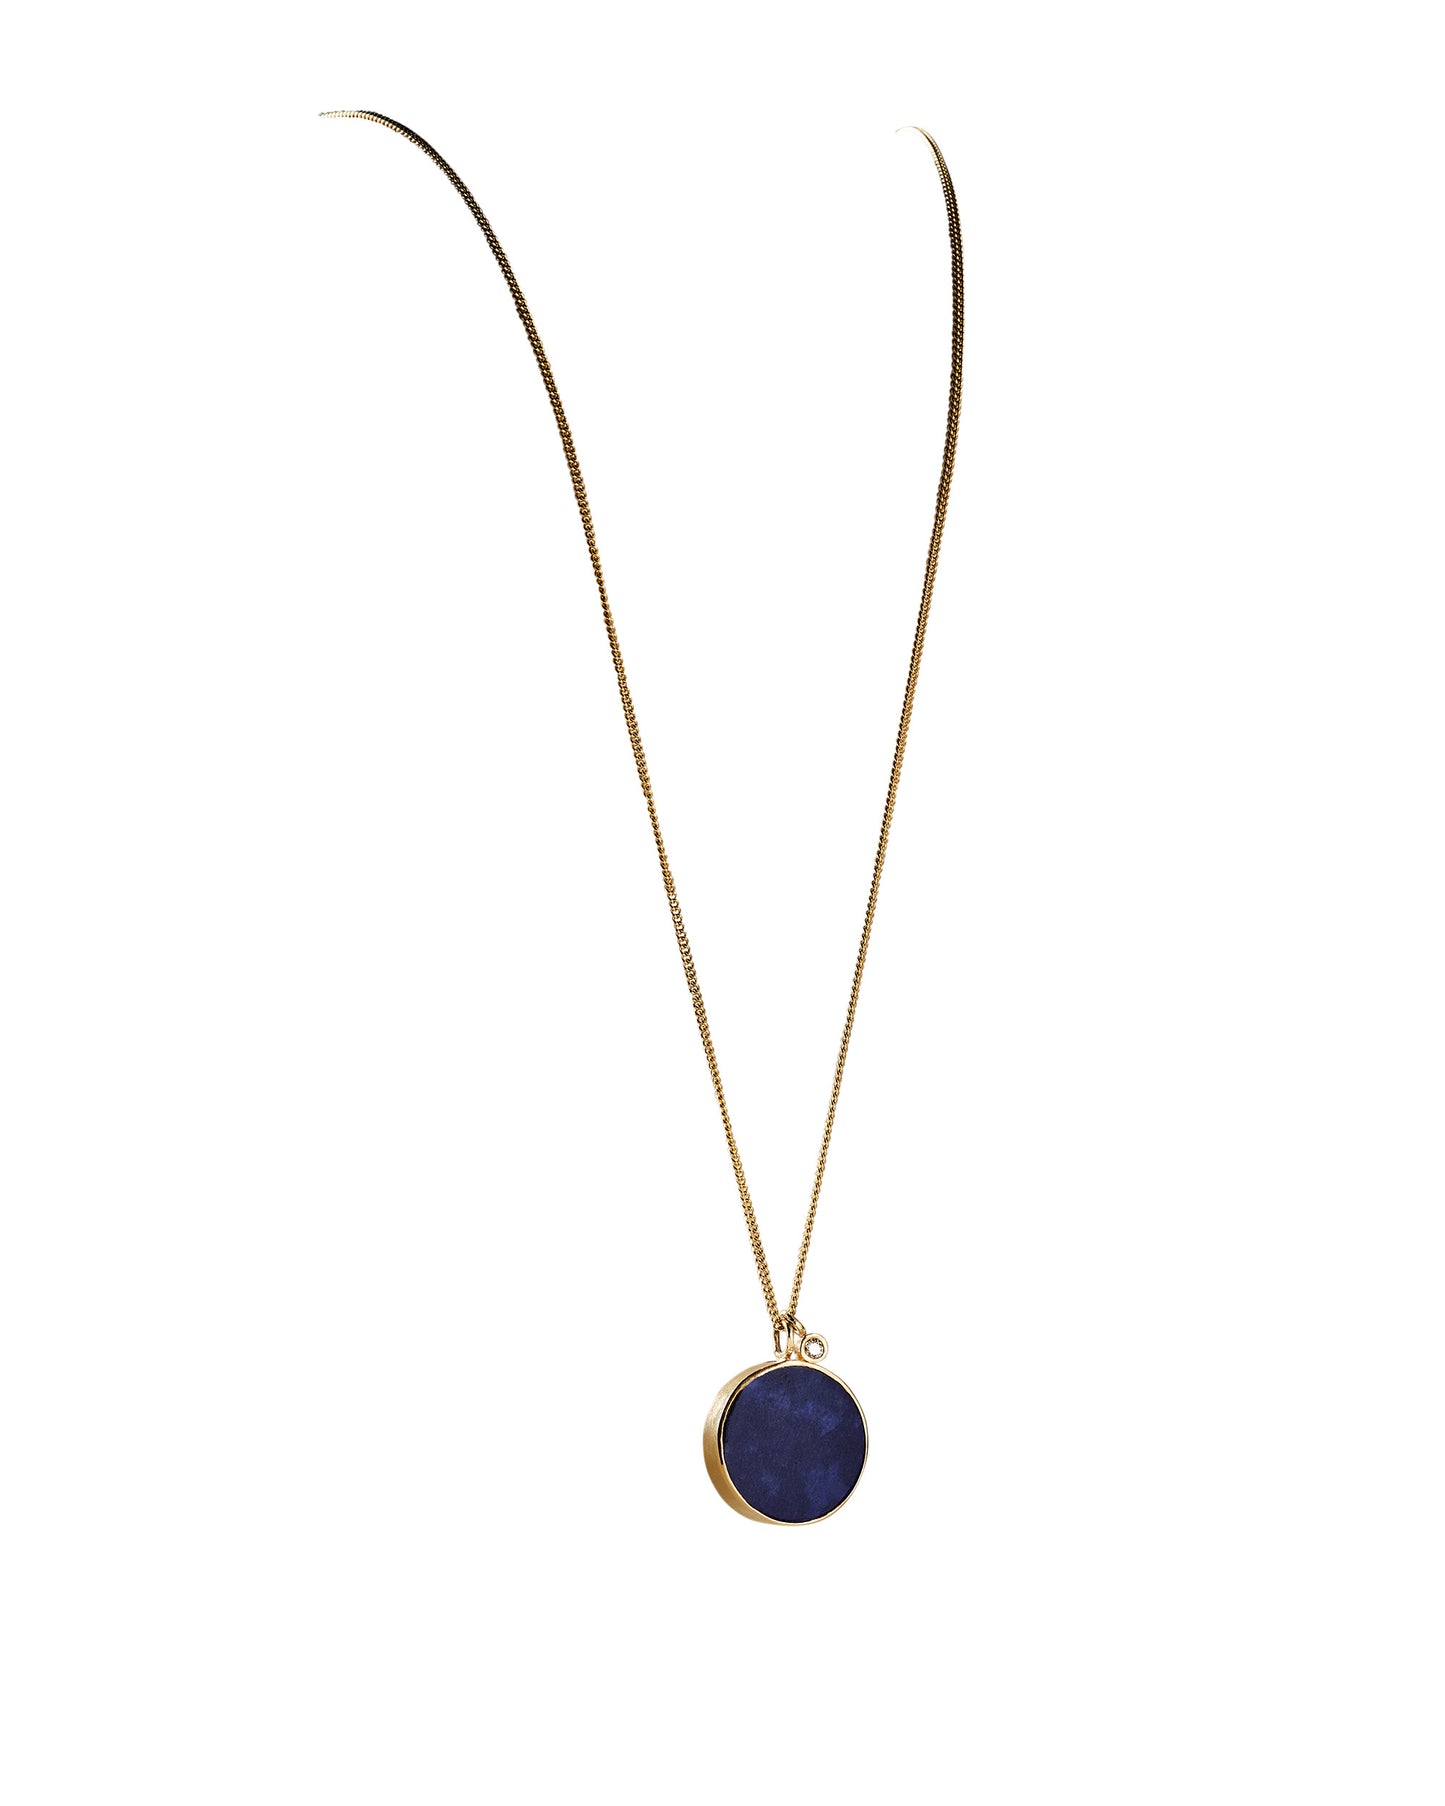 Blue lapis lazuli and gold pendant necklace white background